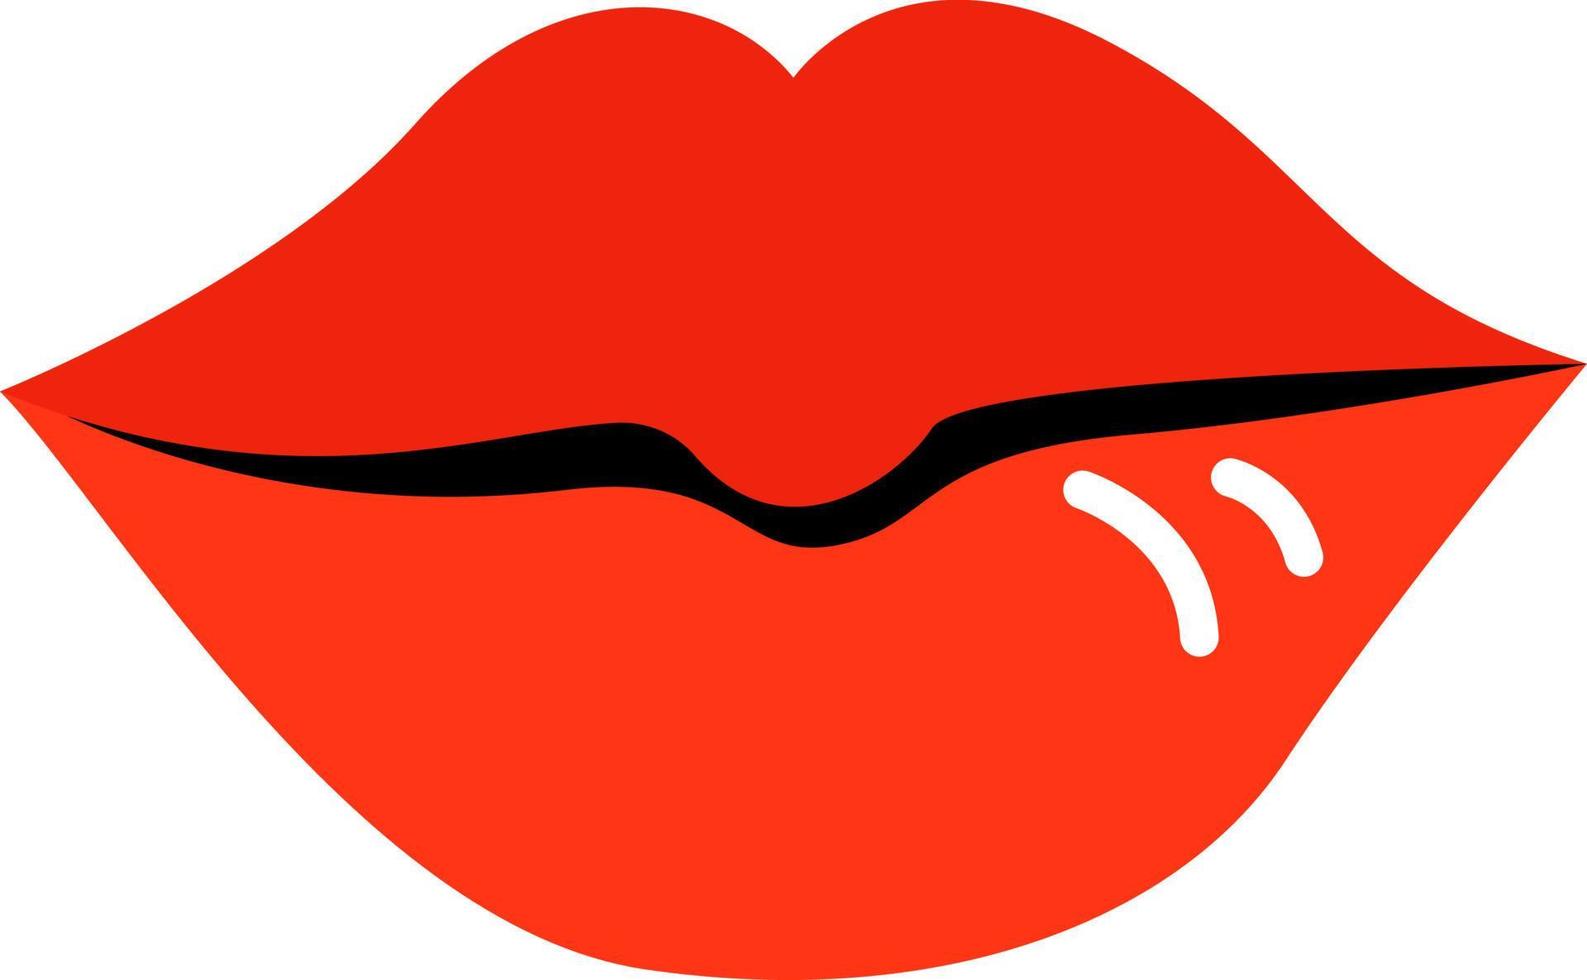 Red lips, illustration, vector on white background.